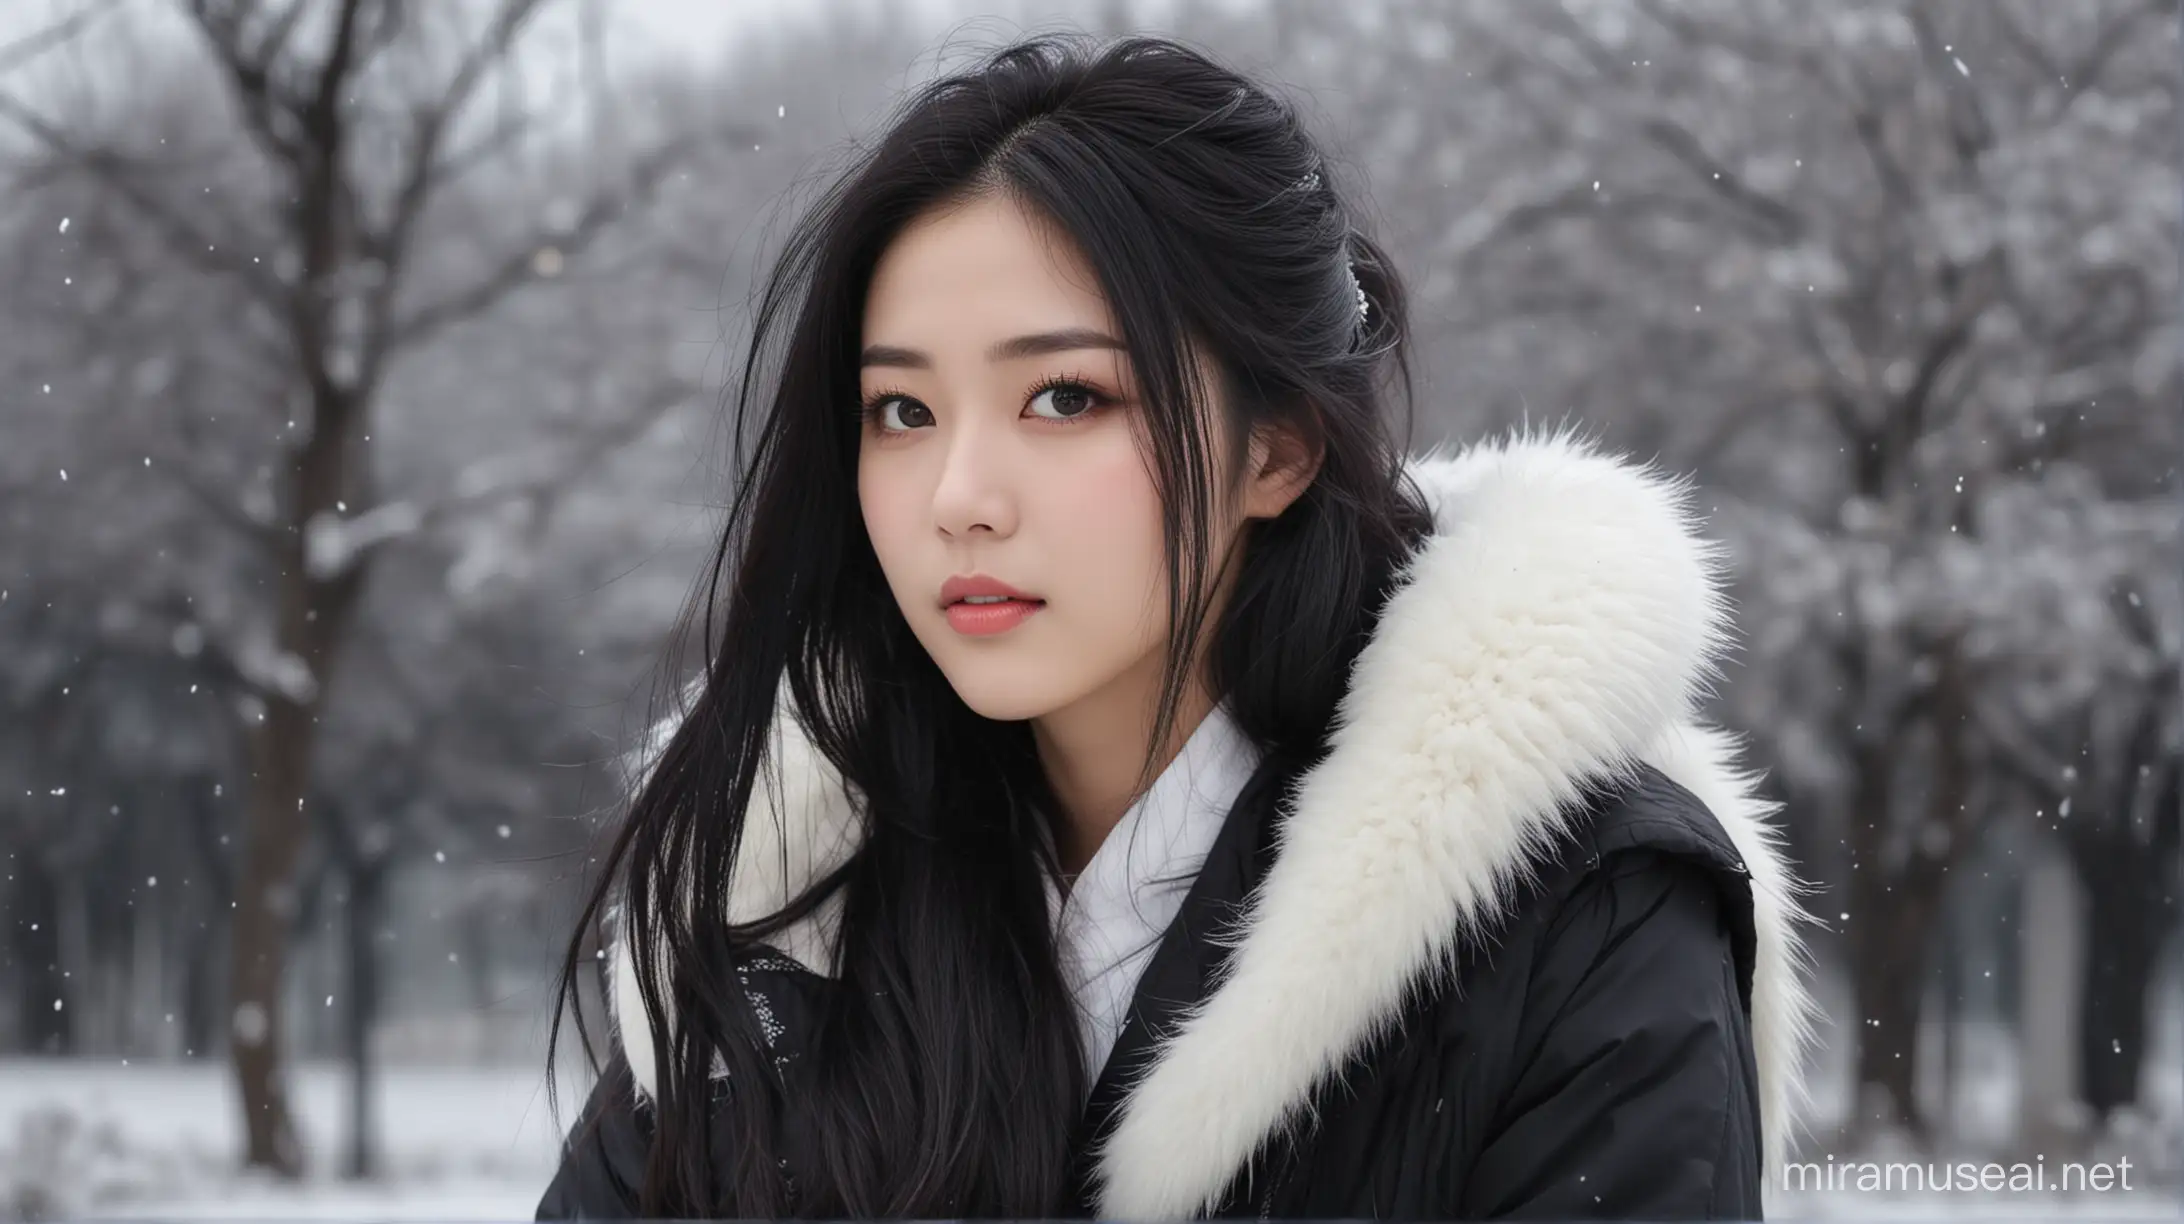 Elegant Oriental Woman in Winter Coat Braving Snowstorm